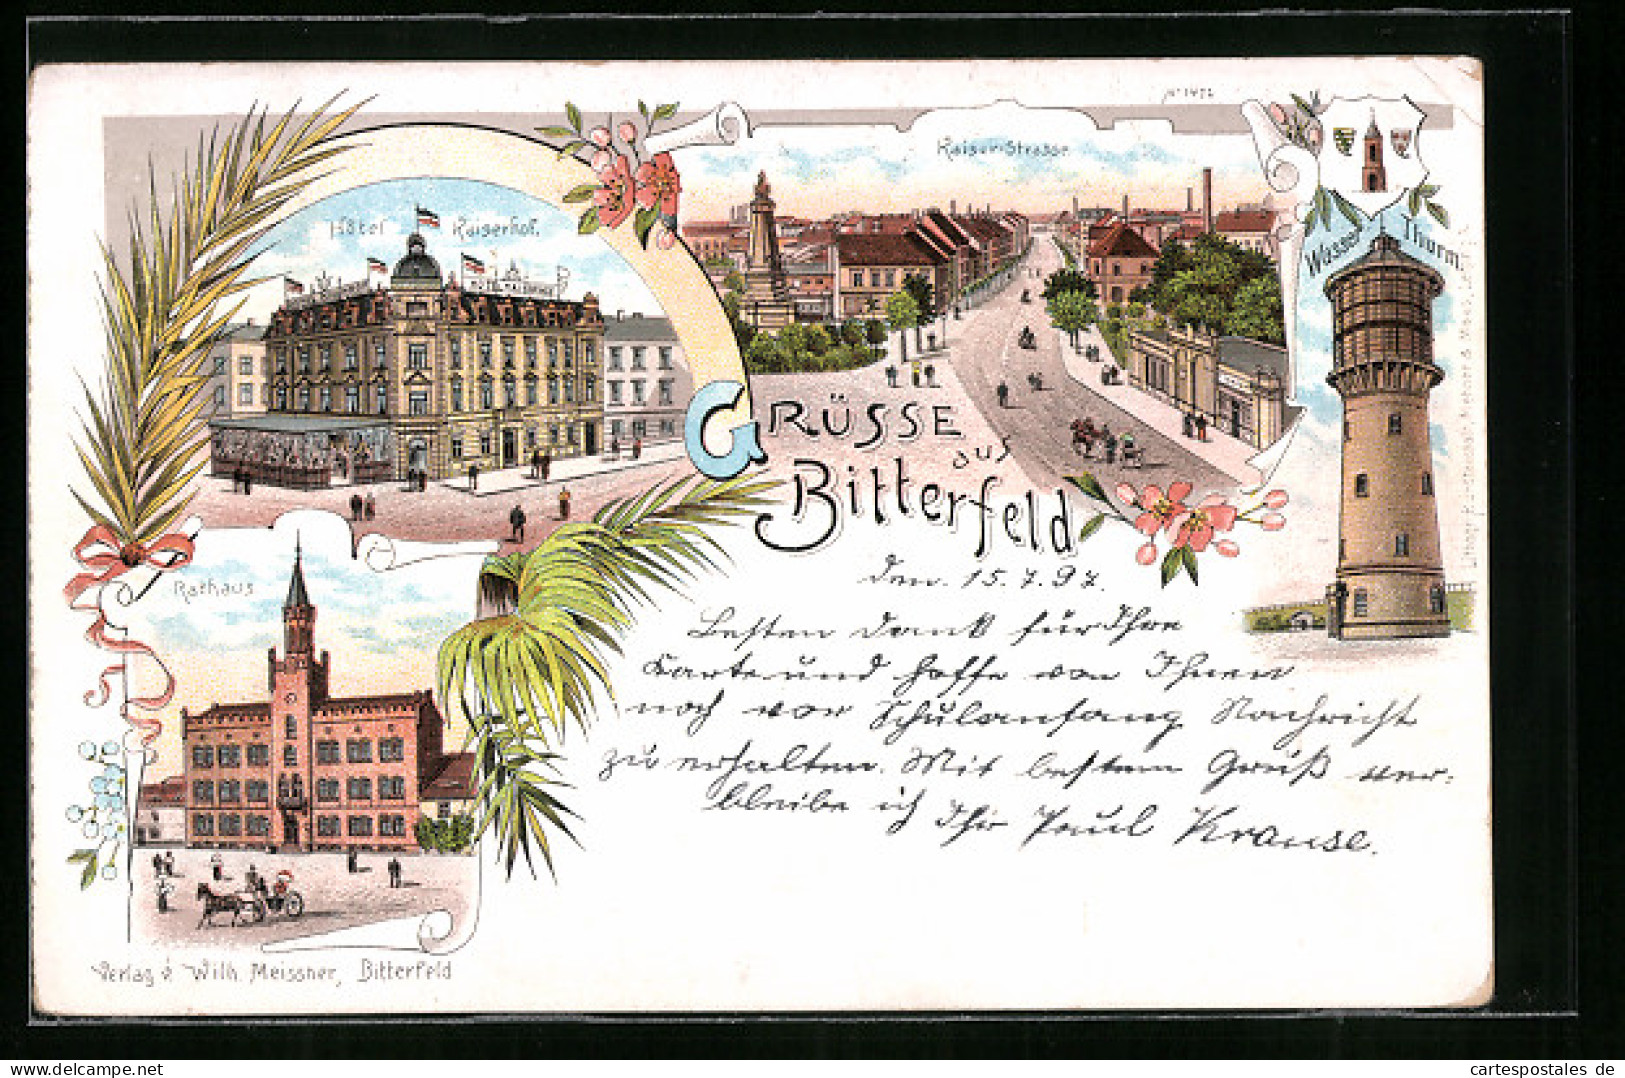 Lithographie Bitterfeld, Hotel Kaiserhof, Kaiser-Strasse, Rathaus  - Bitterfeld